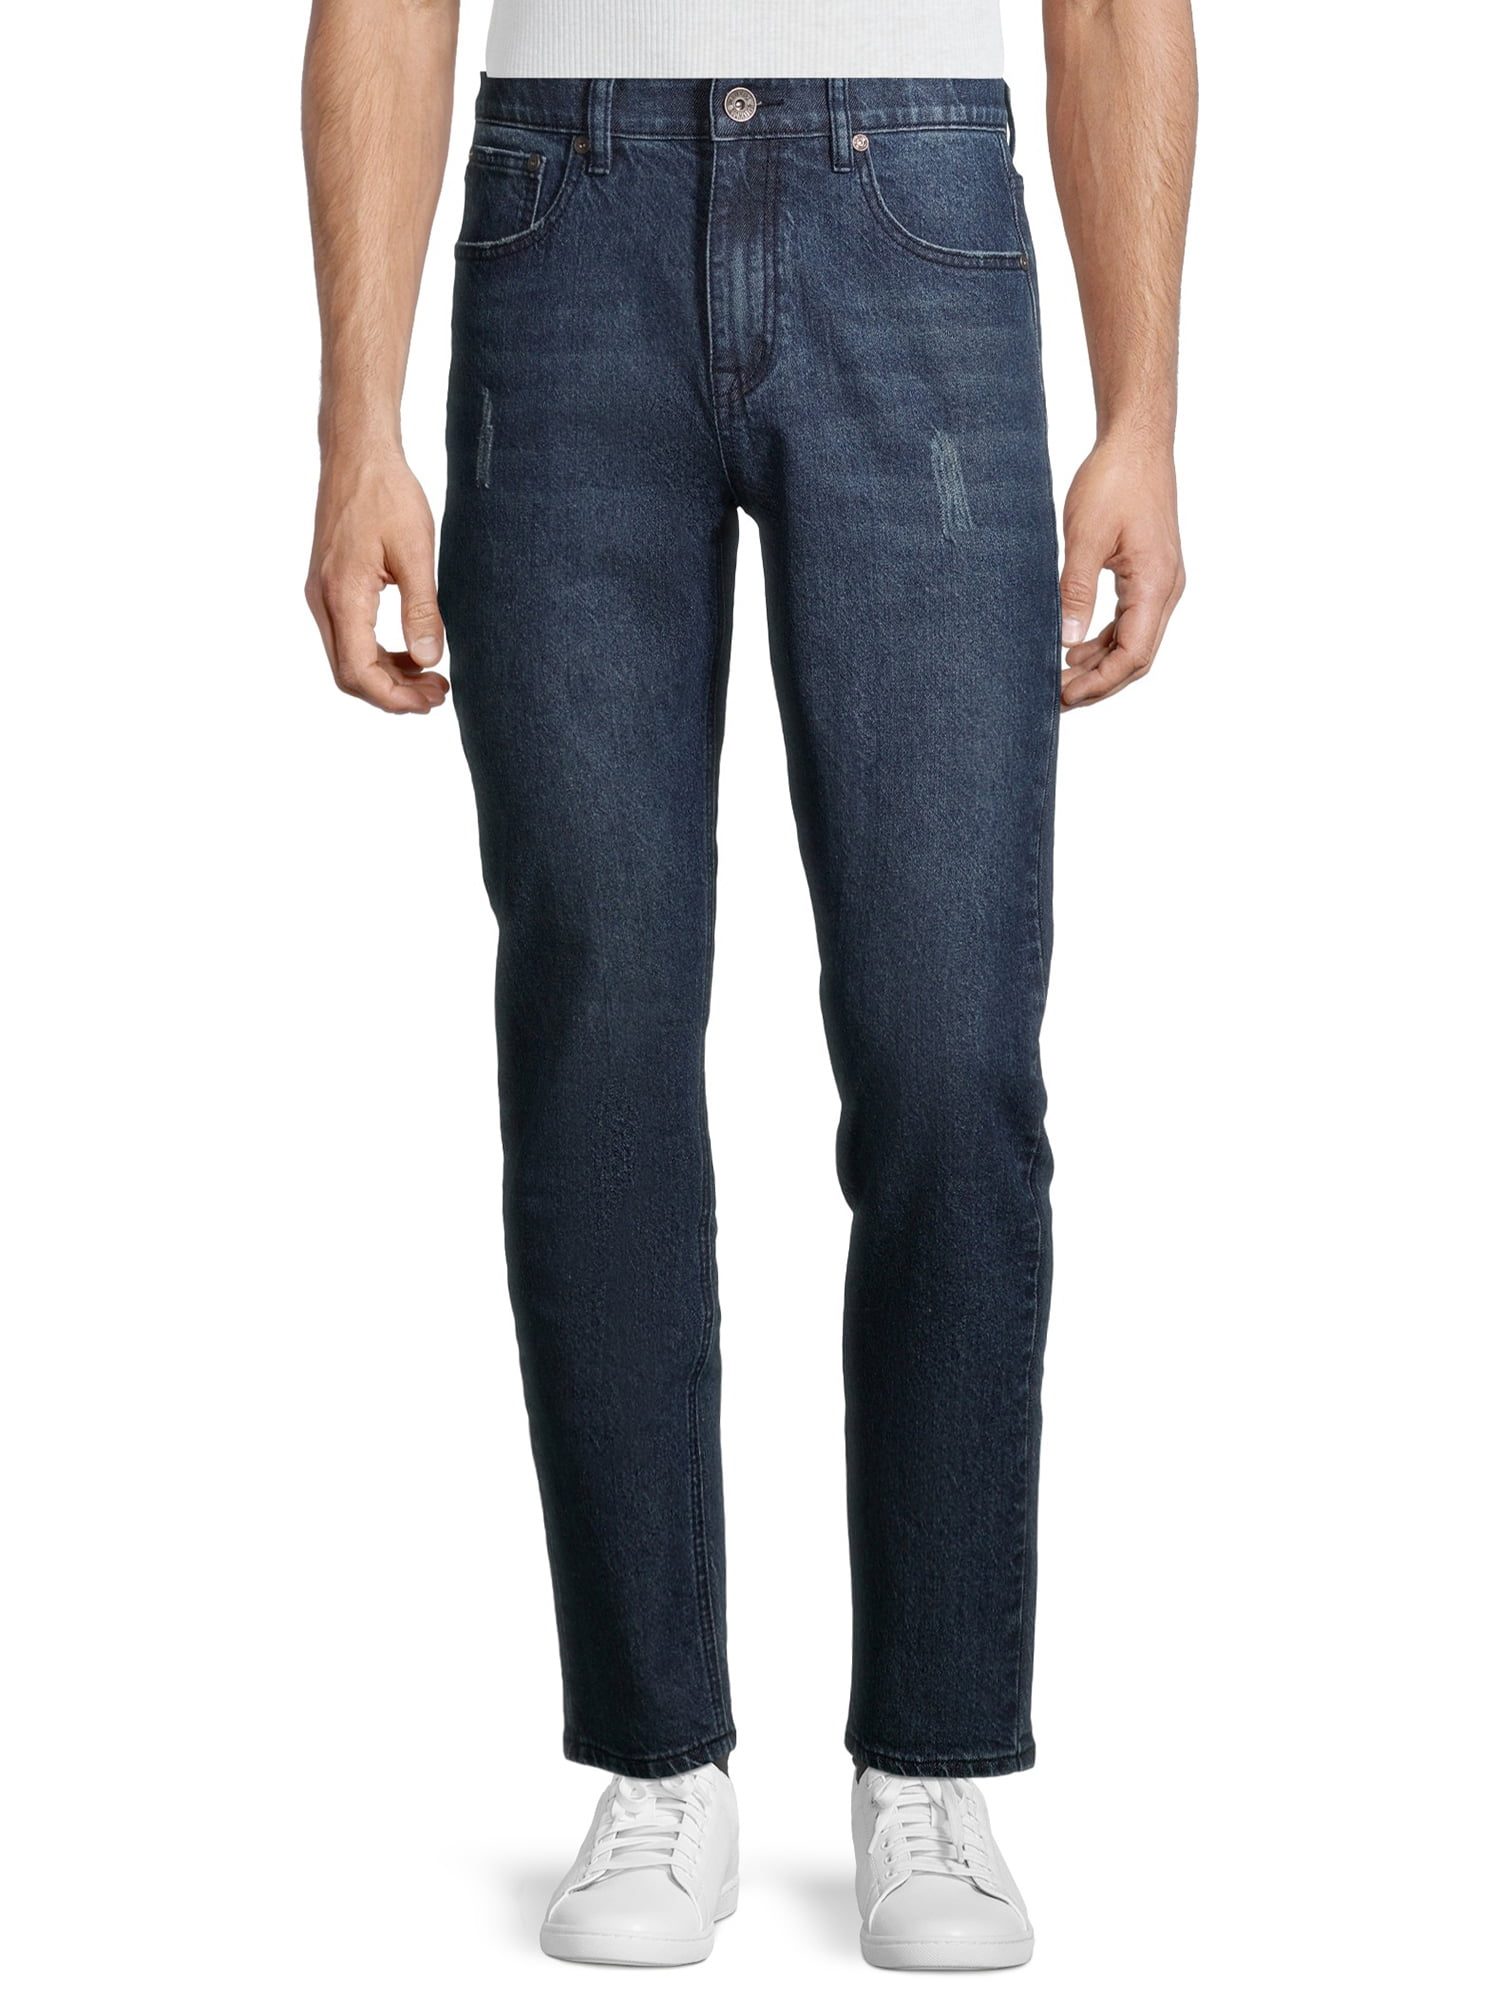 IZOD Men's Comfort Stretch Straight Fit Jeans (Lexington, 36x34) -  Walmart.com